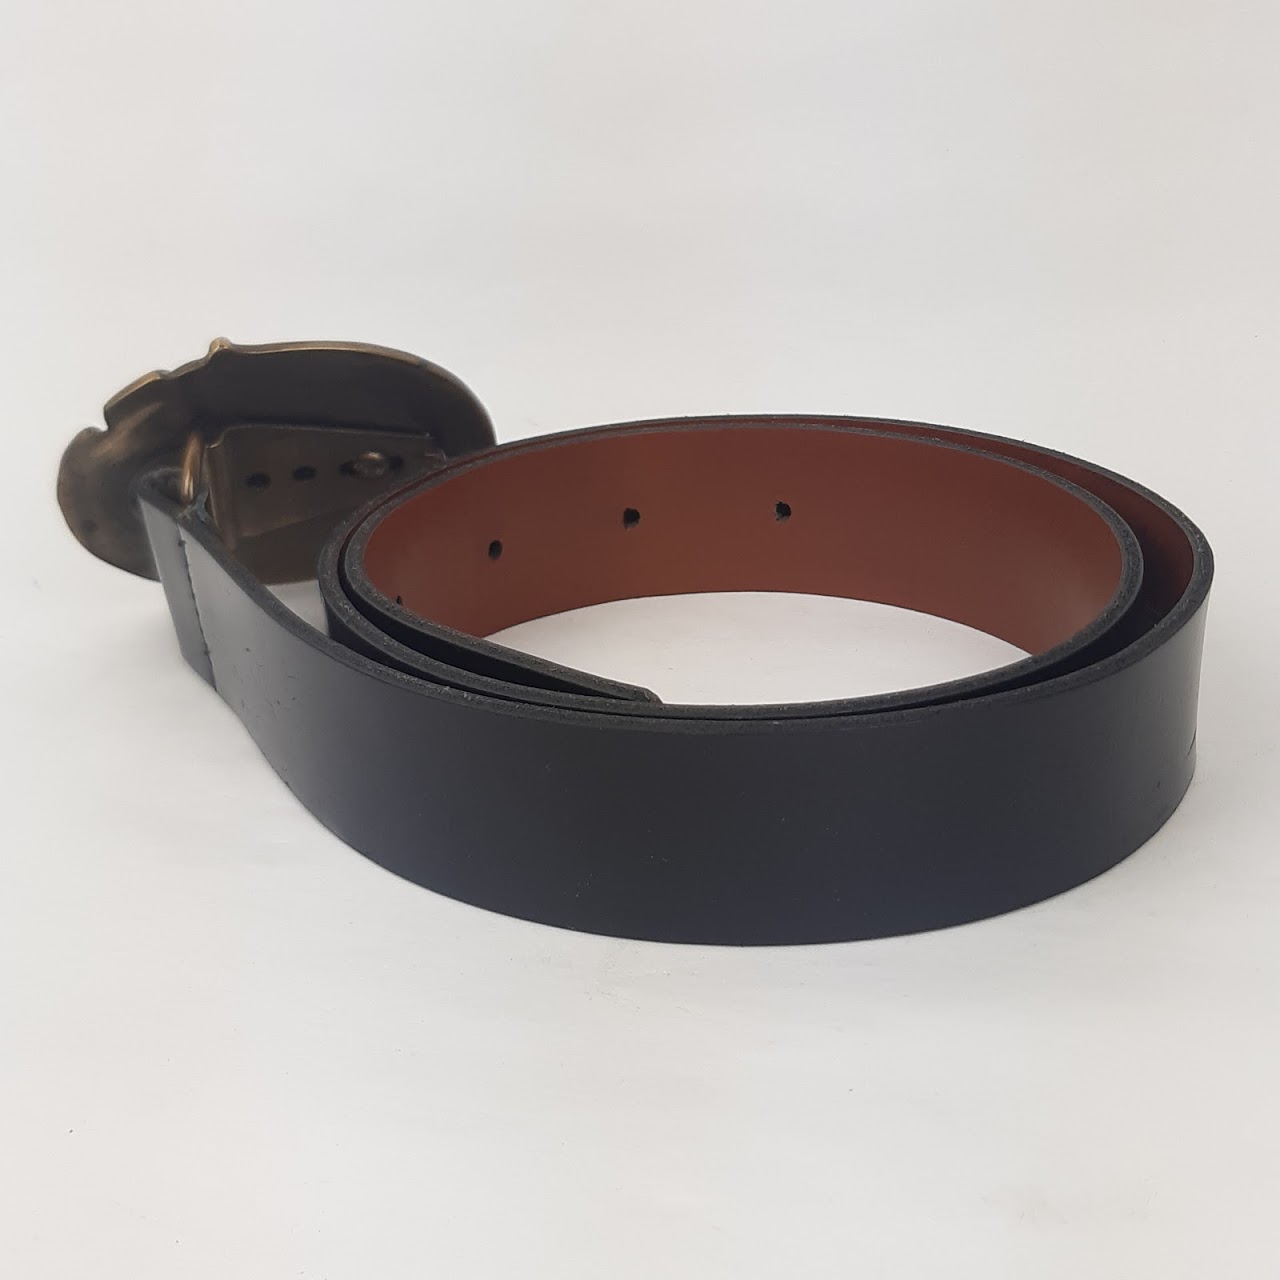 D&G Leather Belt